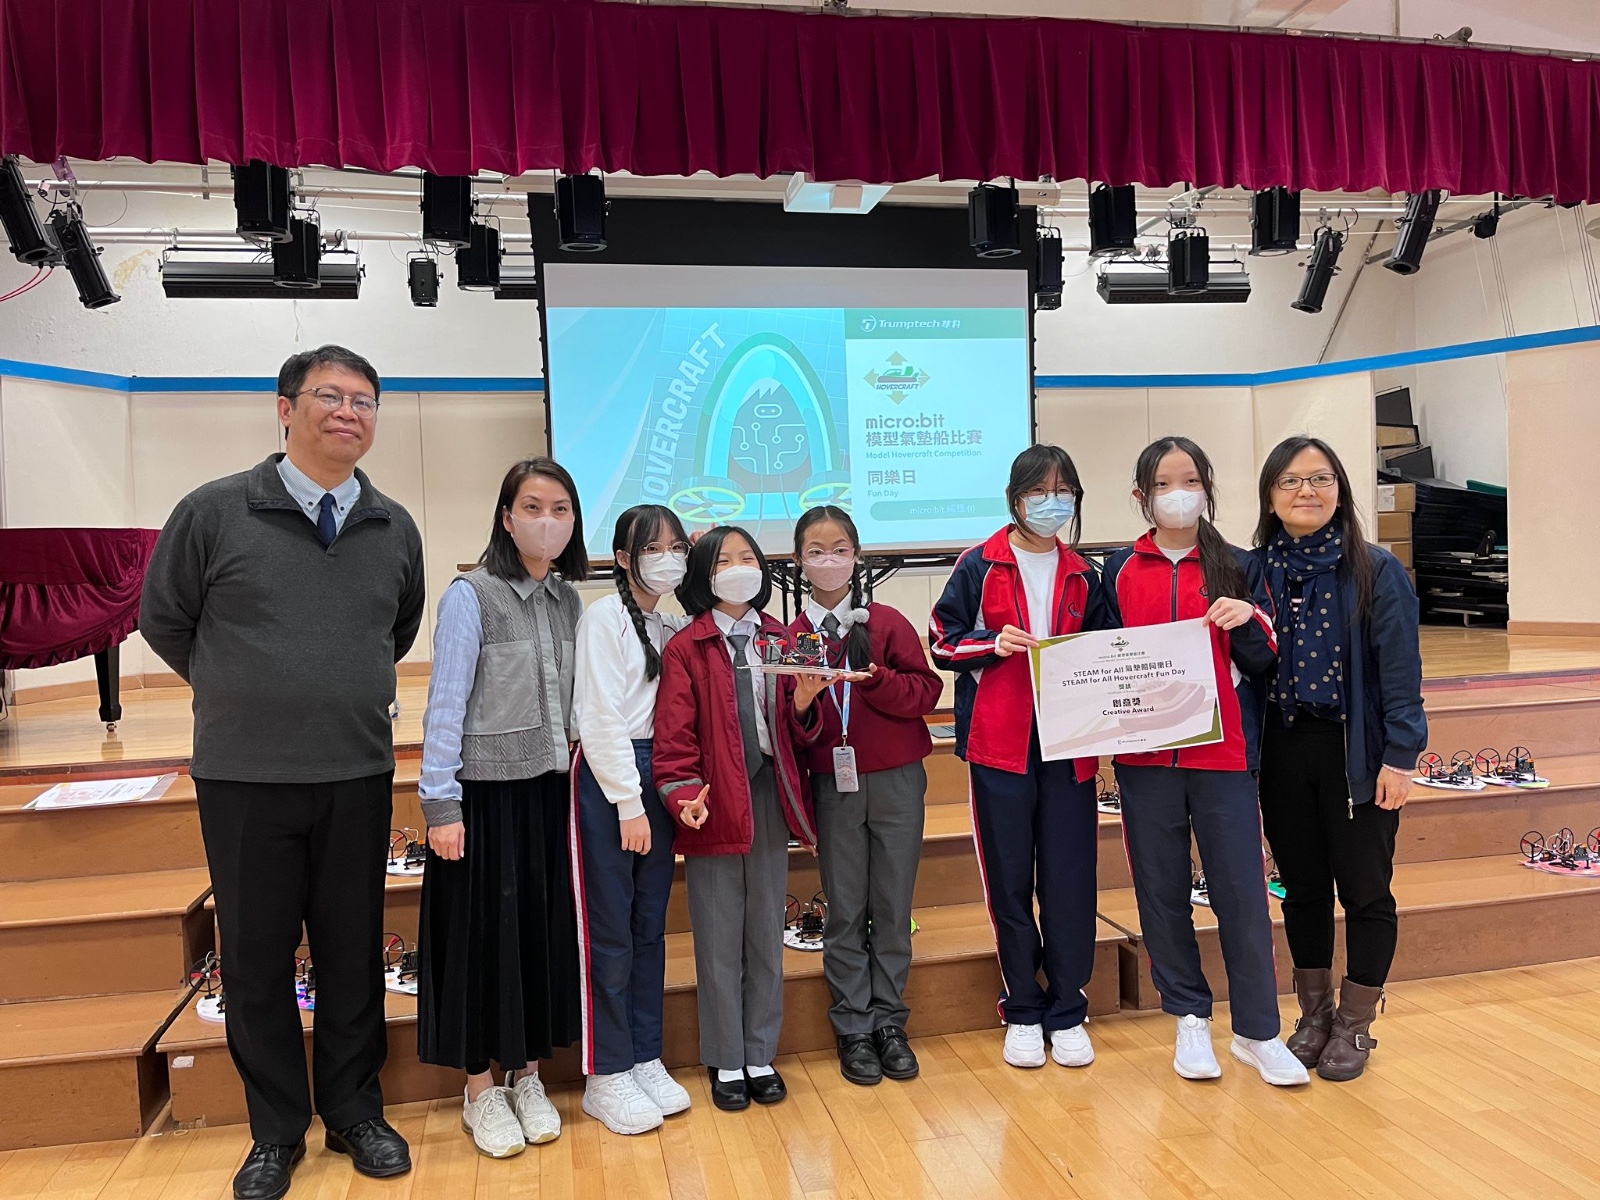 Hovercraft Fun Day - CCC Kei Wan Primary School